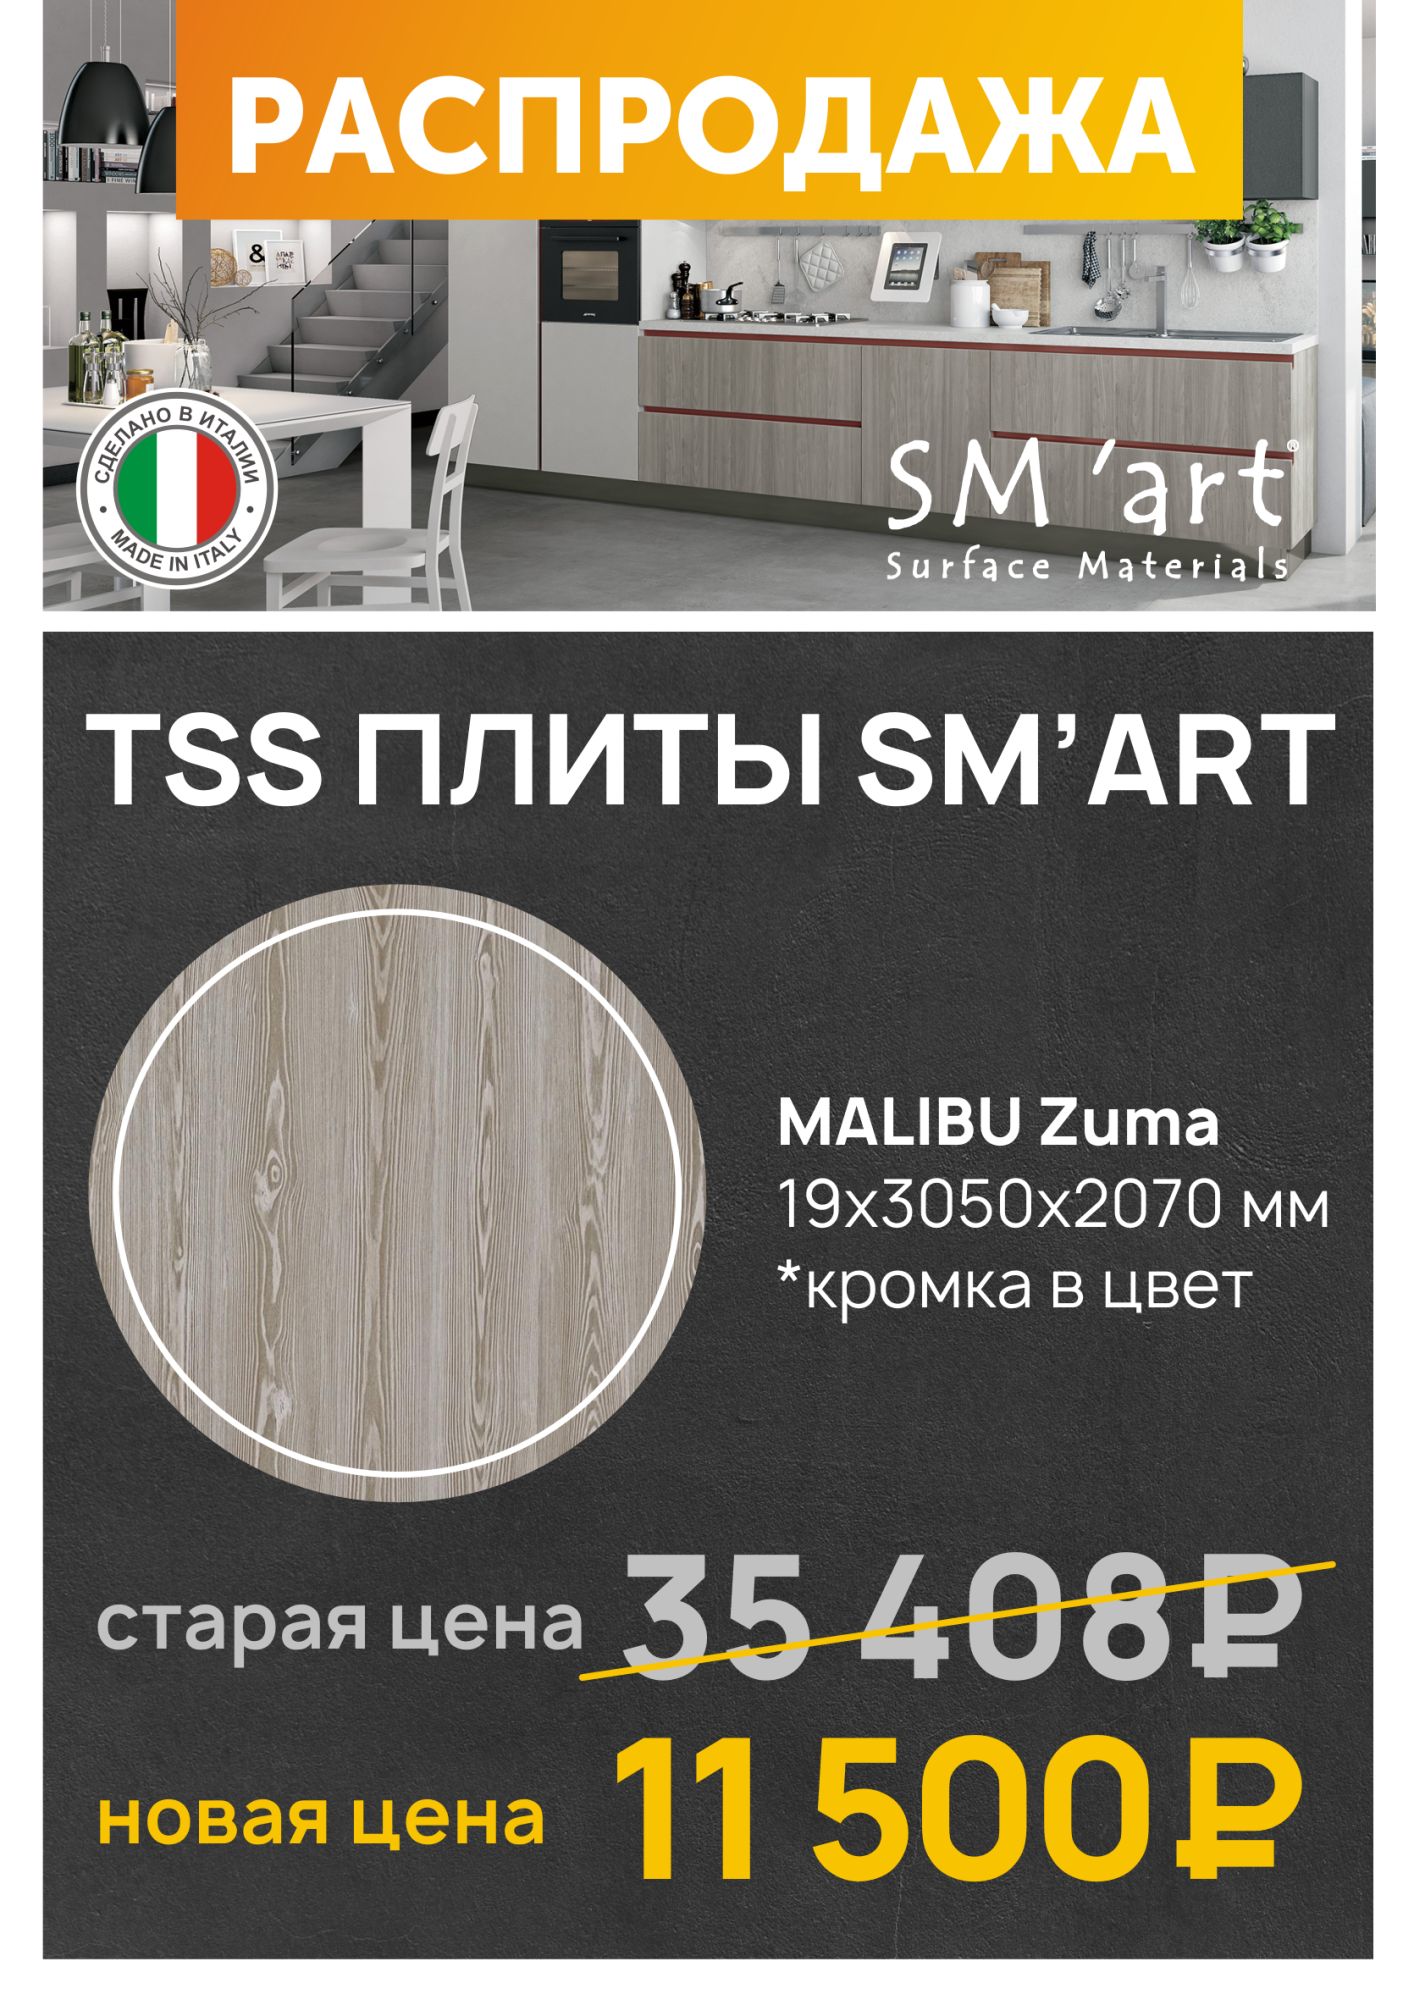 TSS-плиты SM'Art - распродажа!